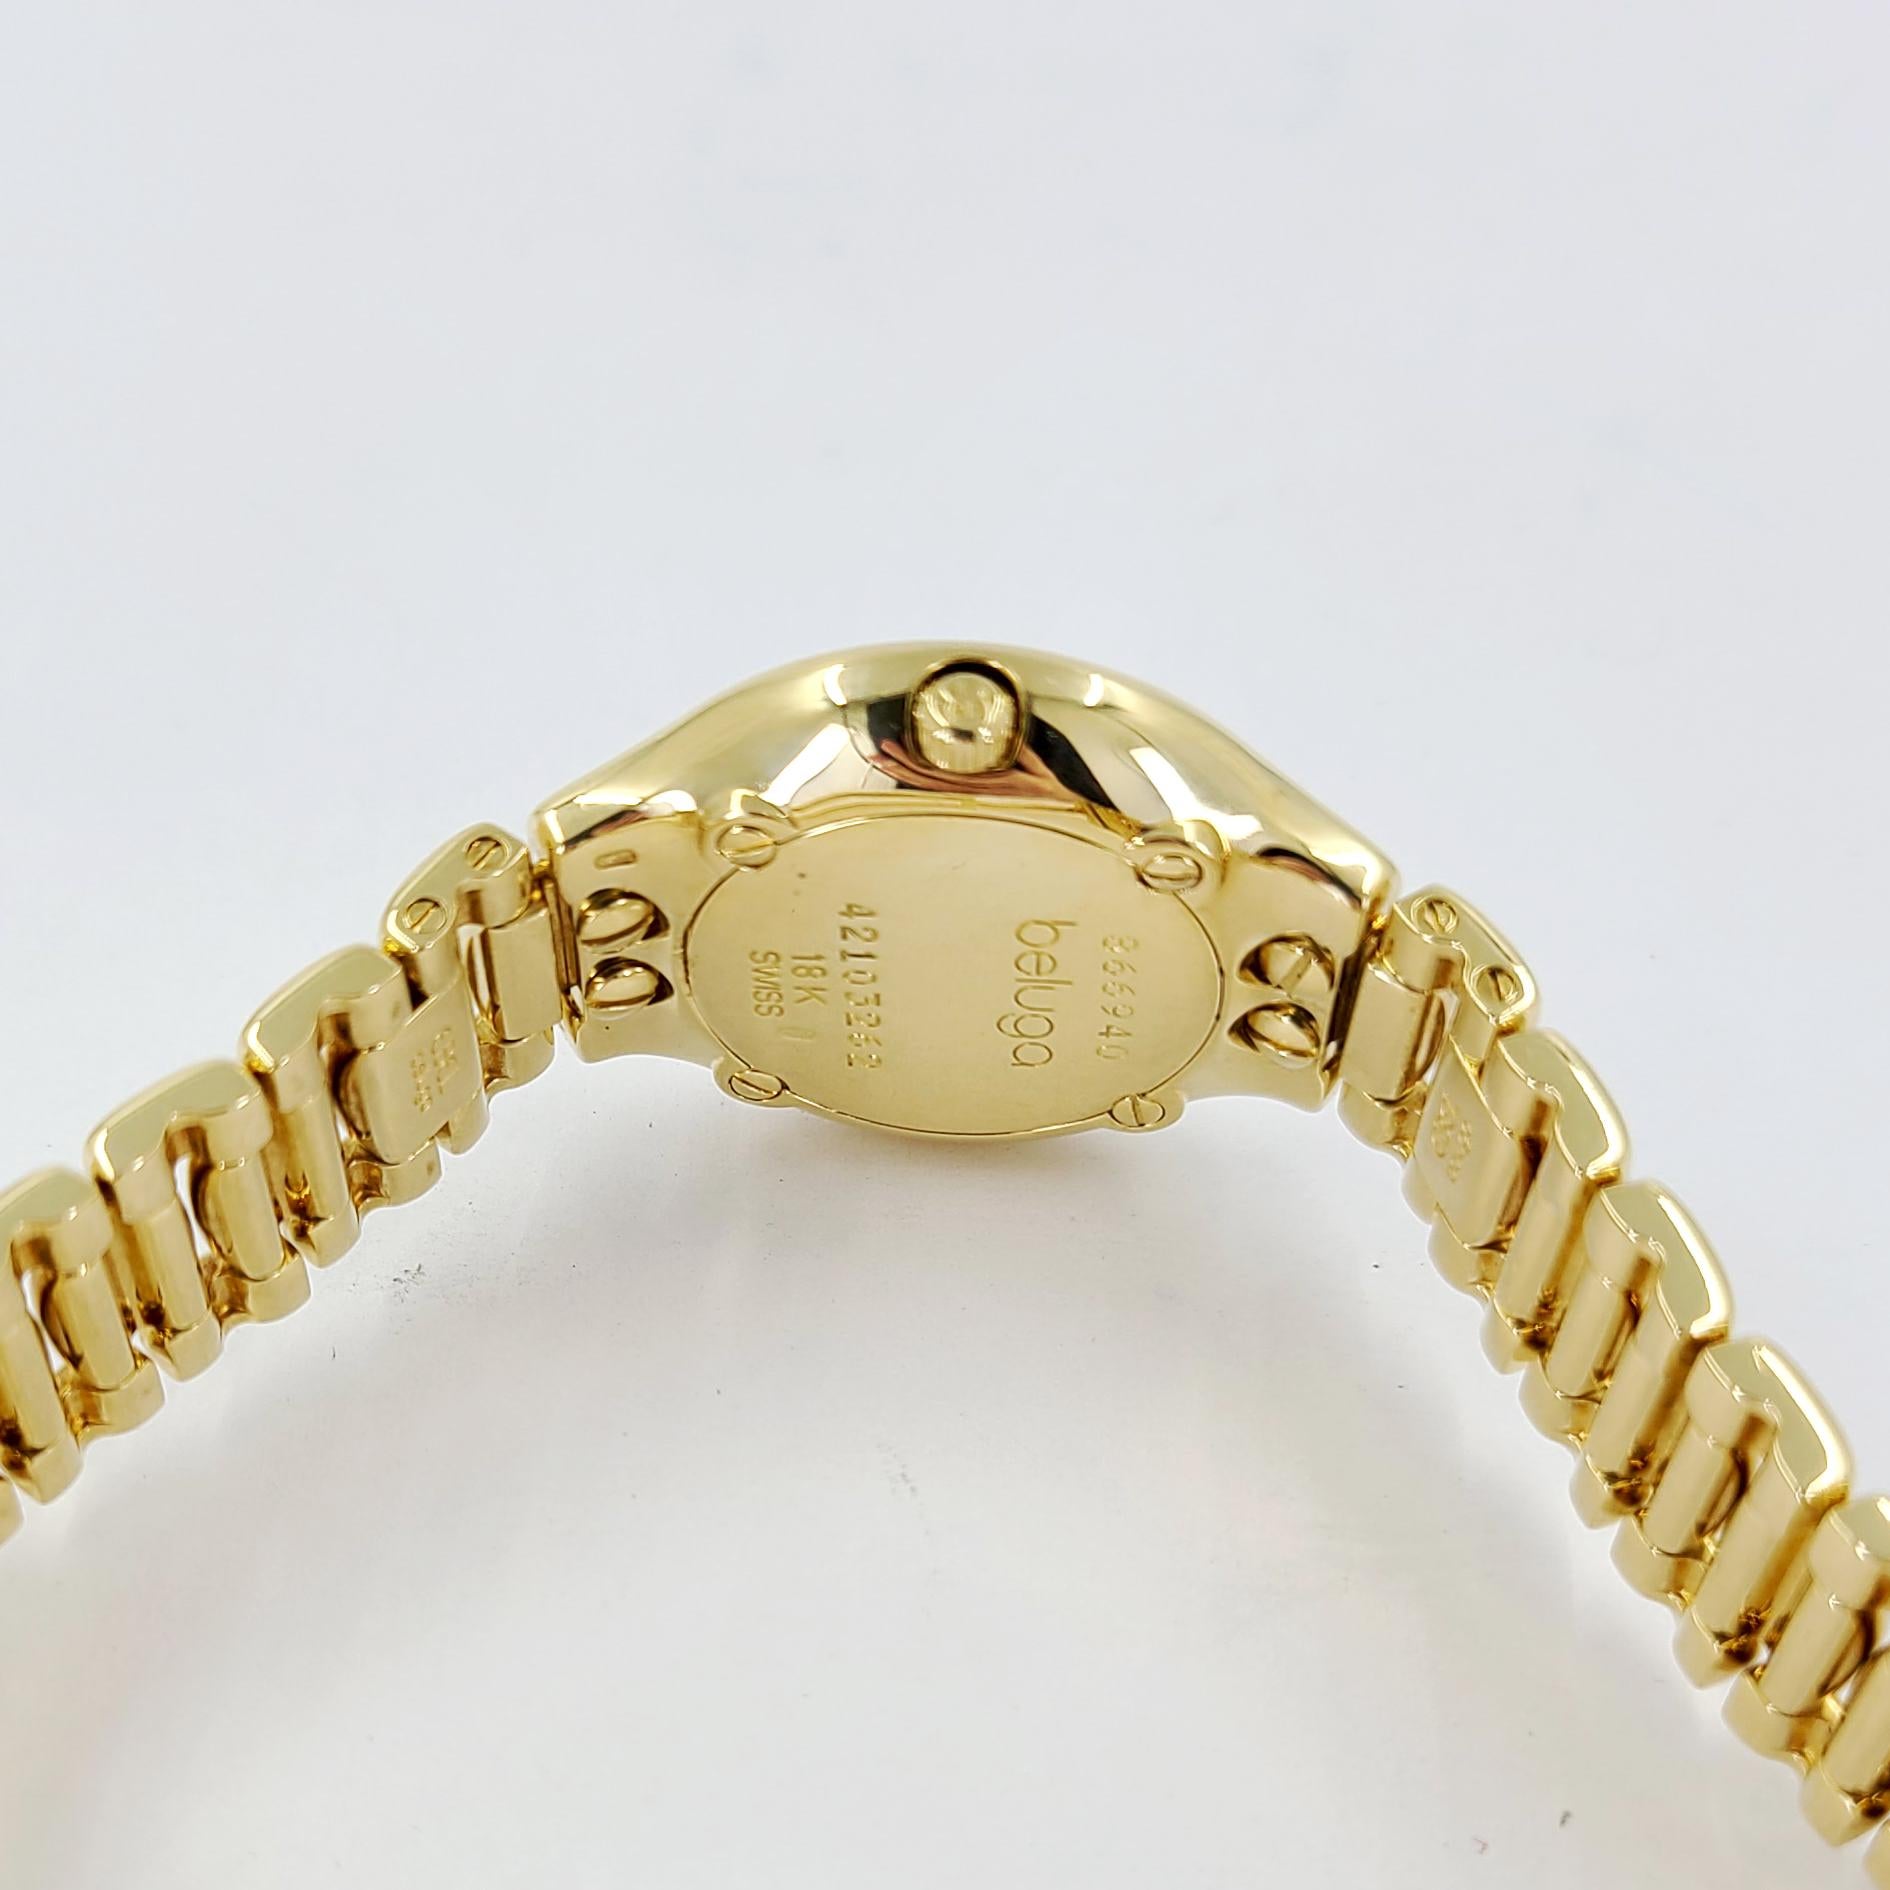 Ebel 18 Karat Yellow Gold Lady's Beluga Wristwatch, Diamonds & Mother of Pearl 3